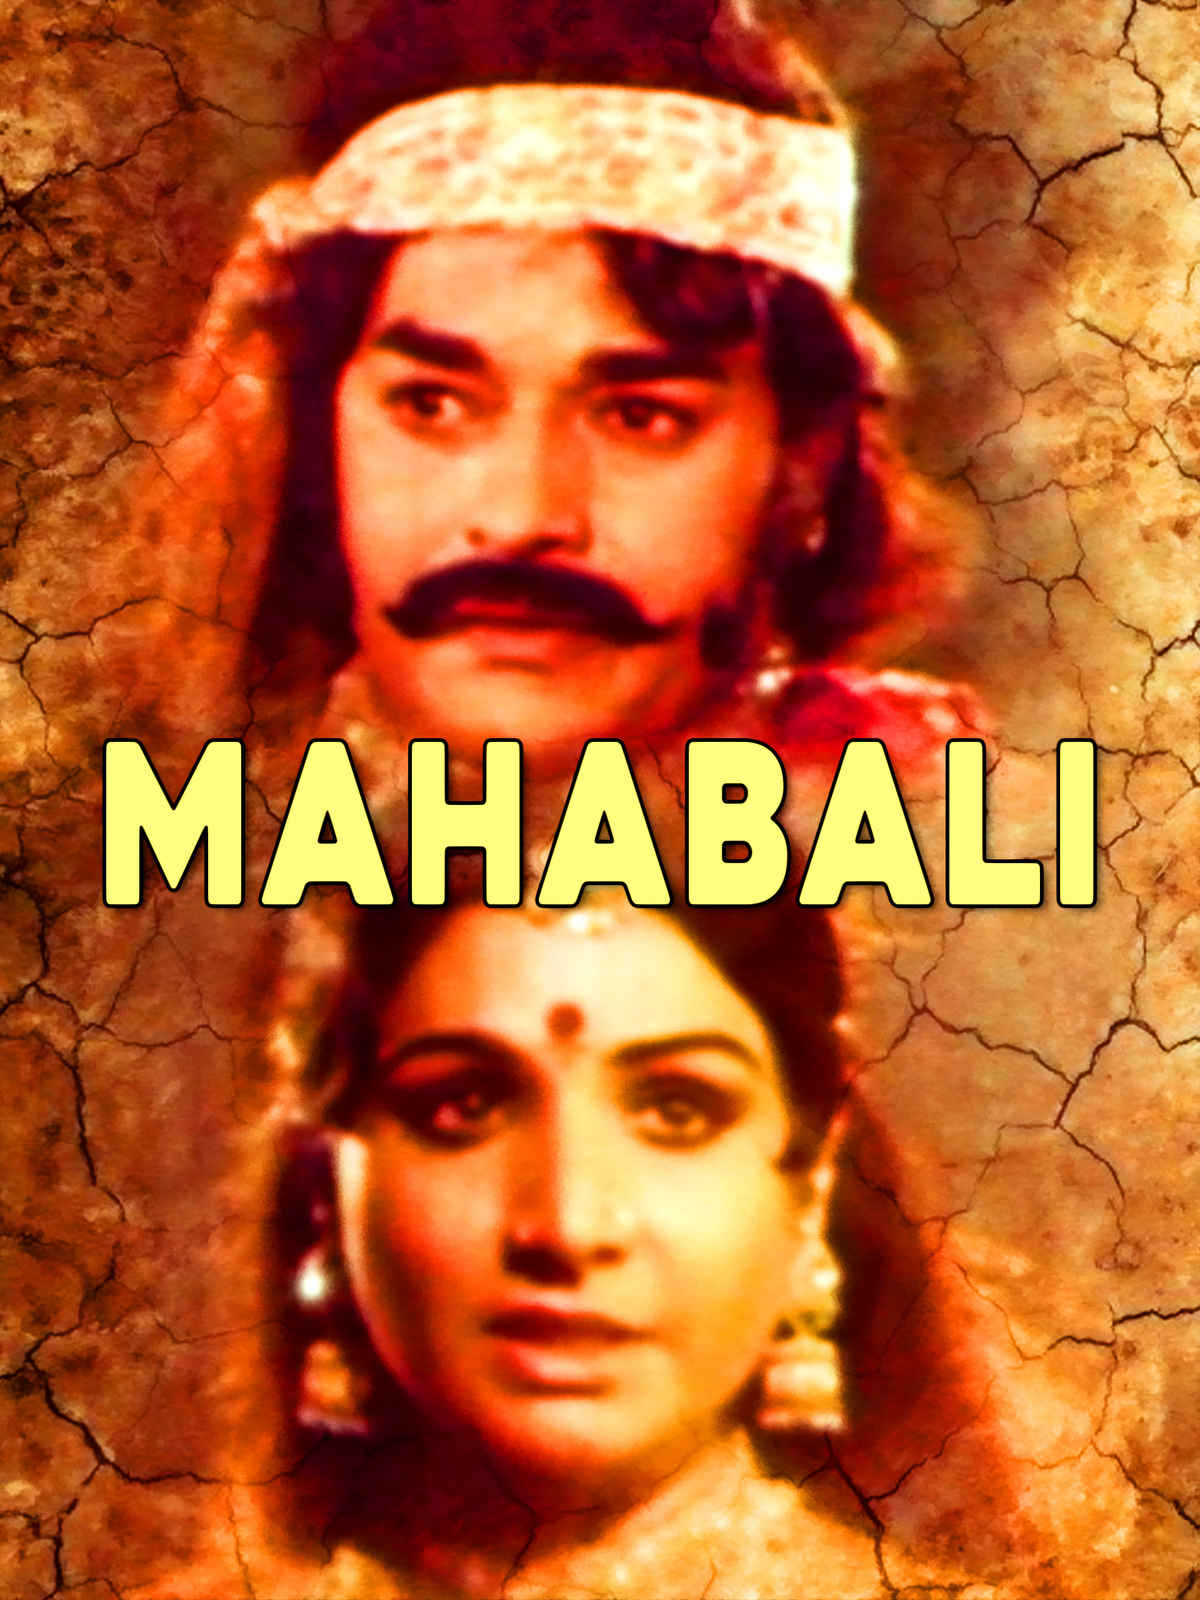 Mahabali